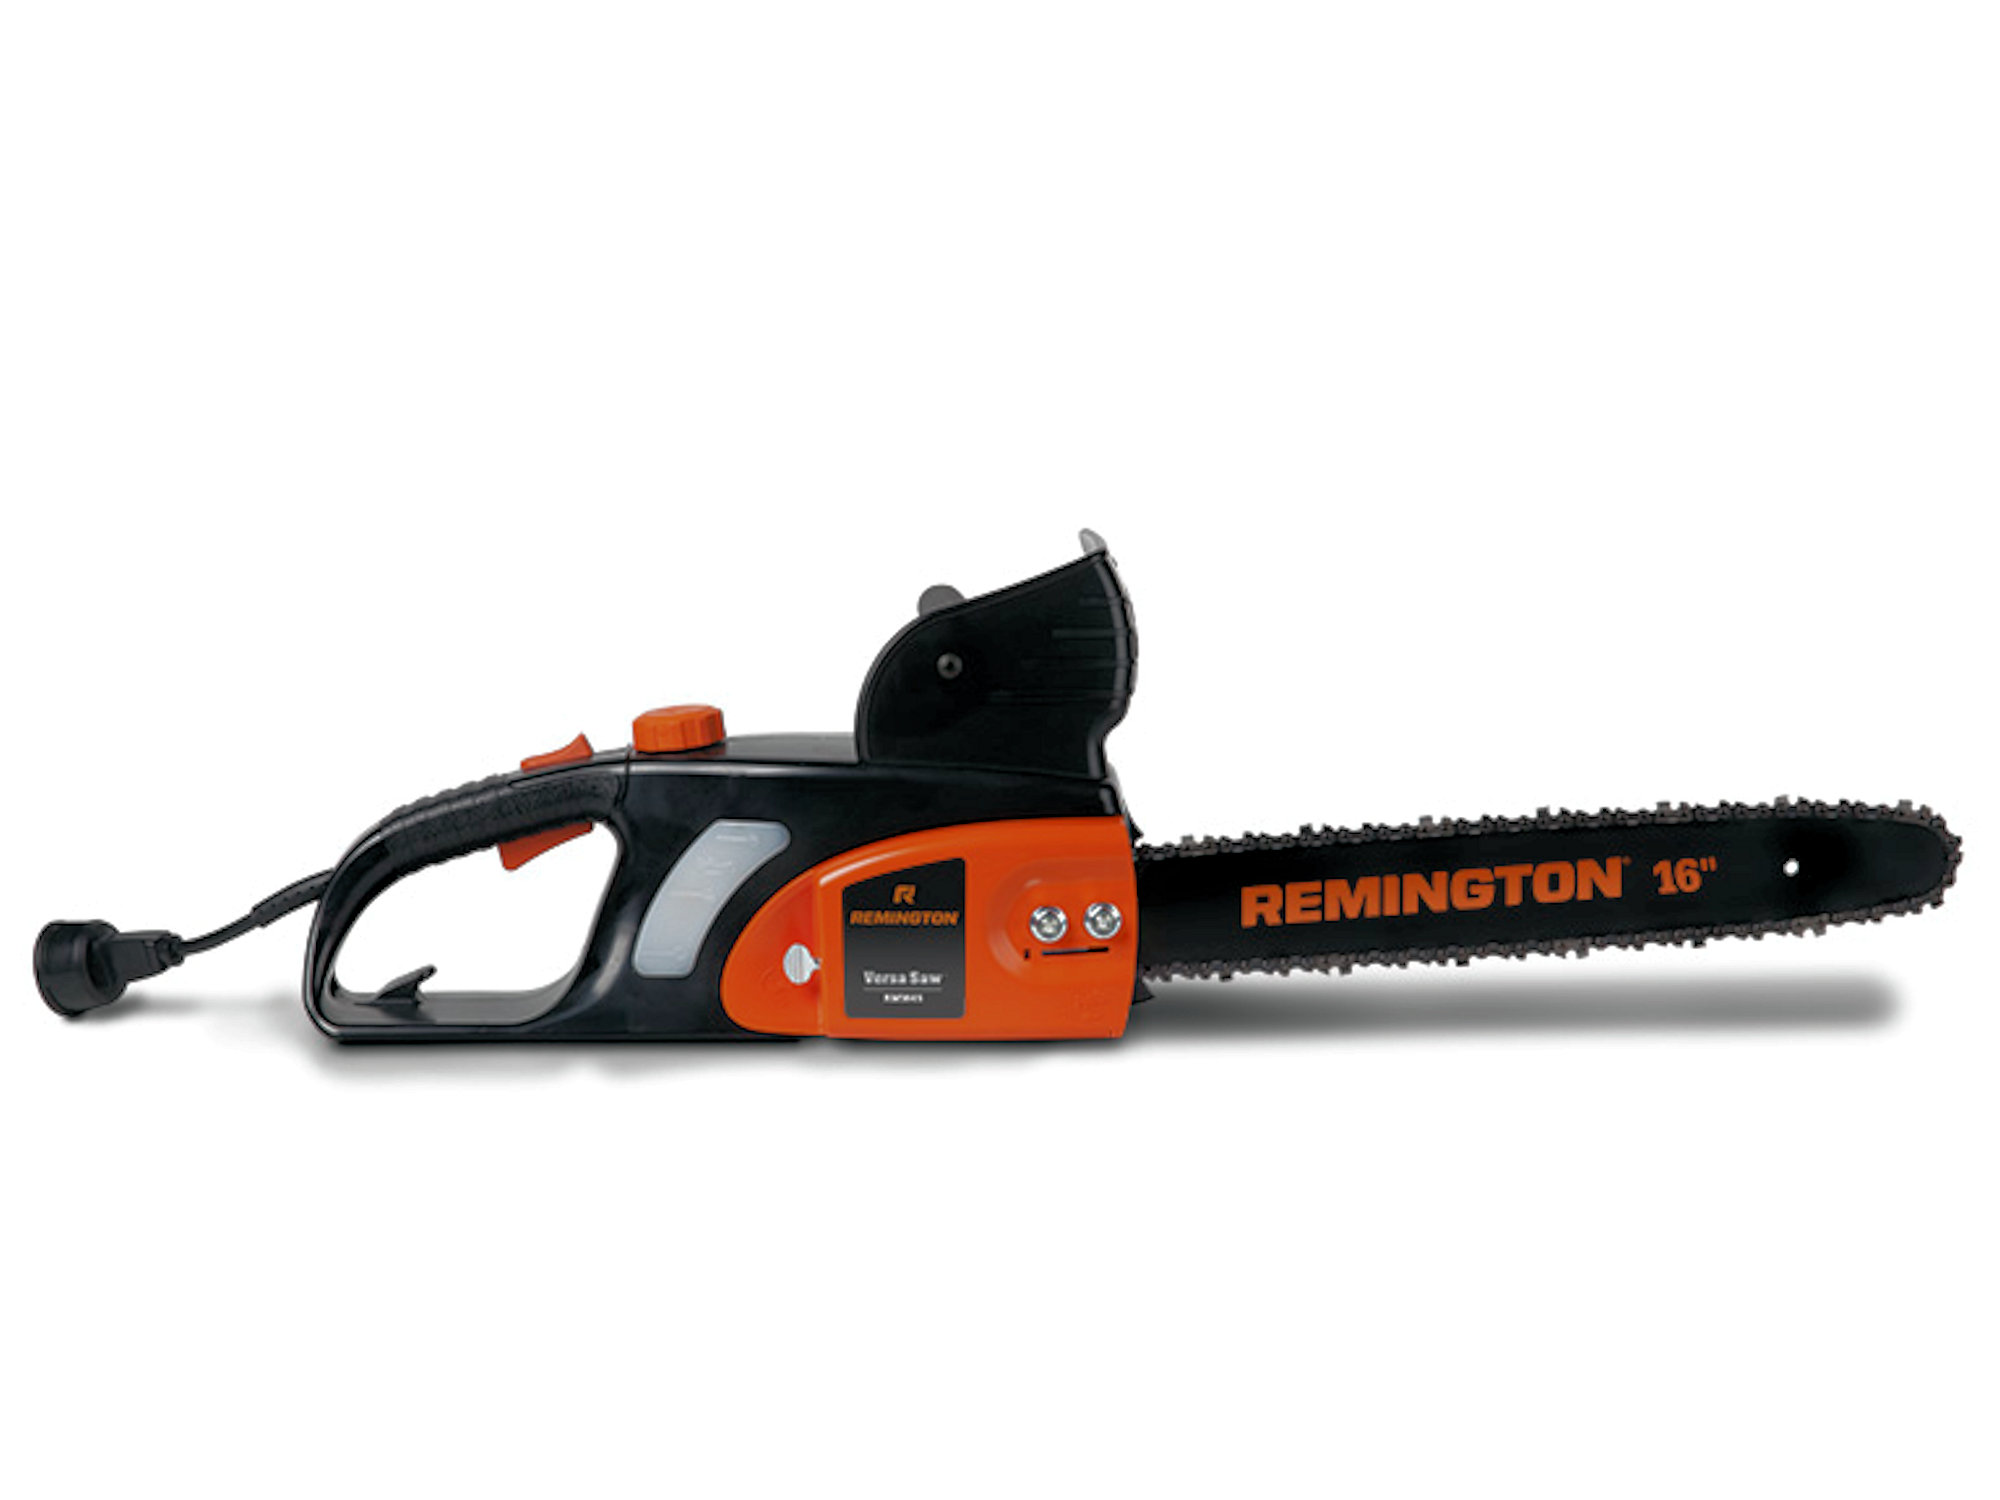 Remington RM1645 Versa Saw — 12-amp electric chainsaw